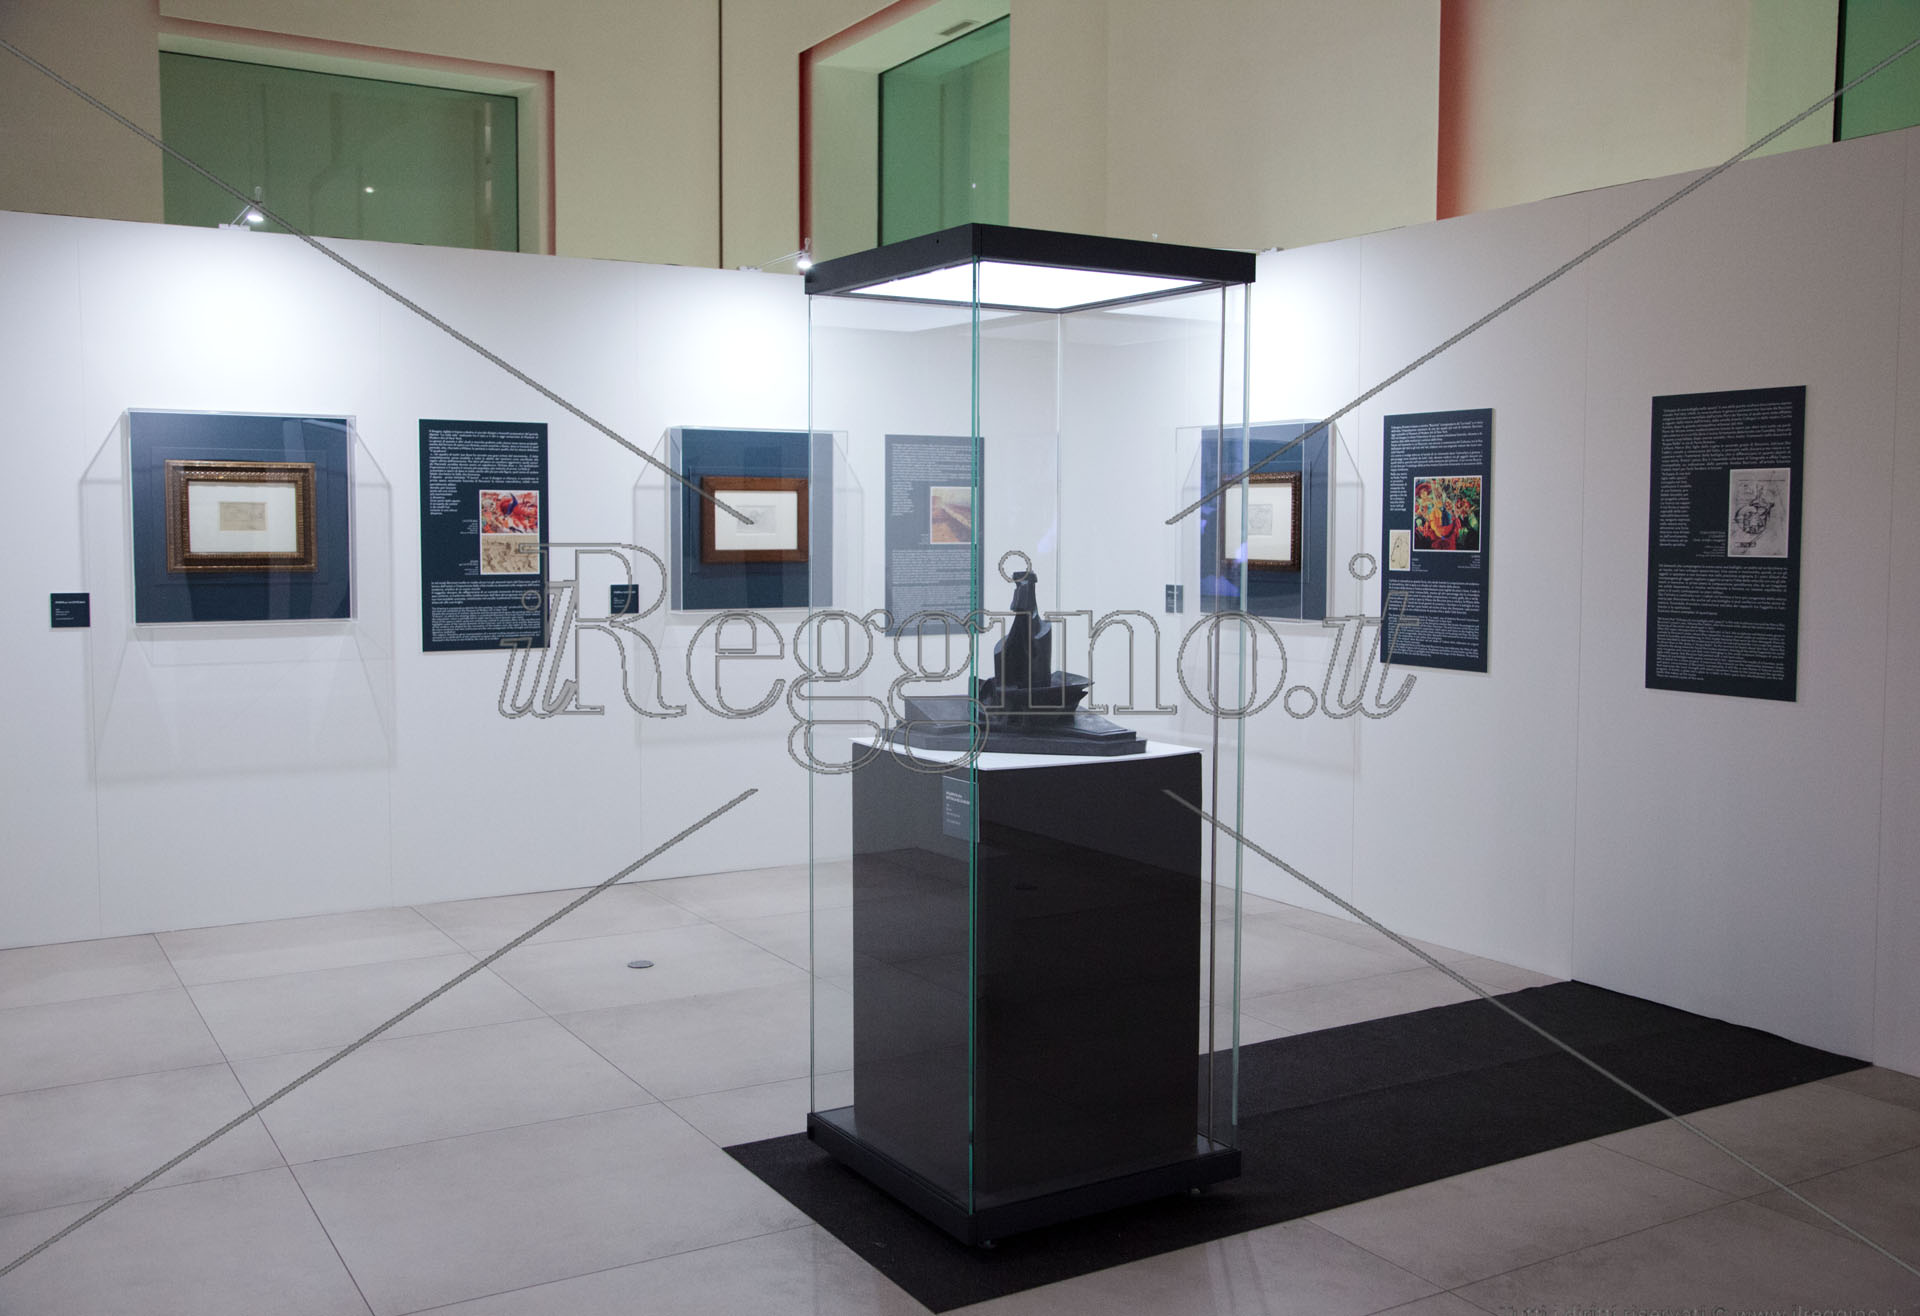 Al MarRc prendono forma i percorsi dedicati a Umberto Boccioni